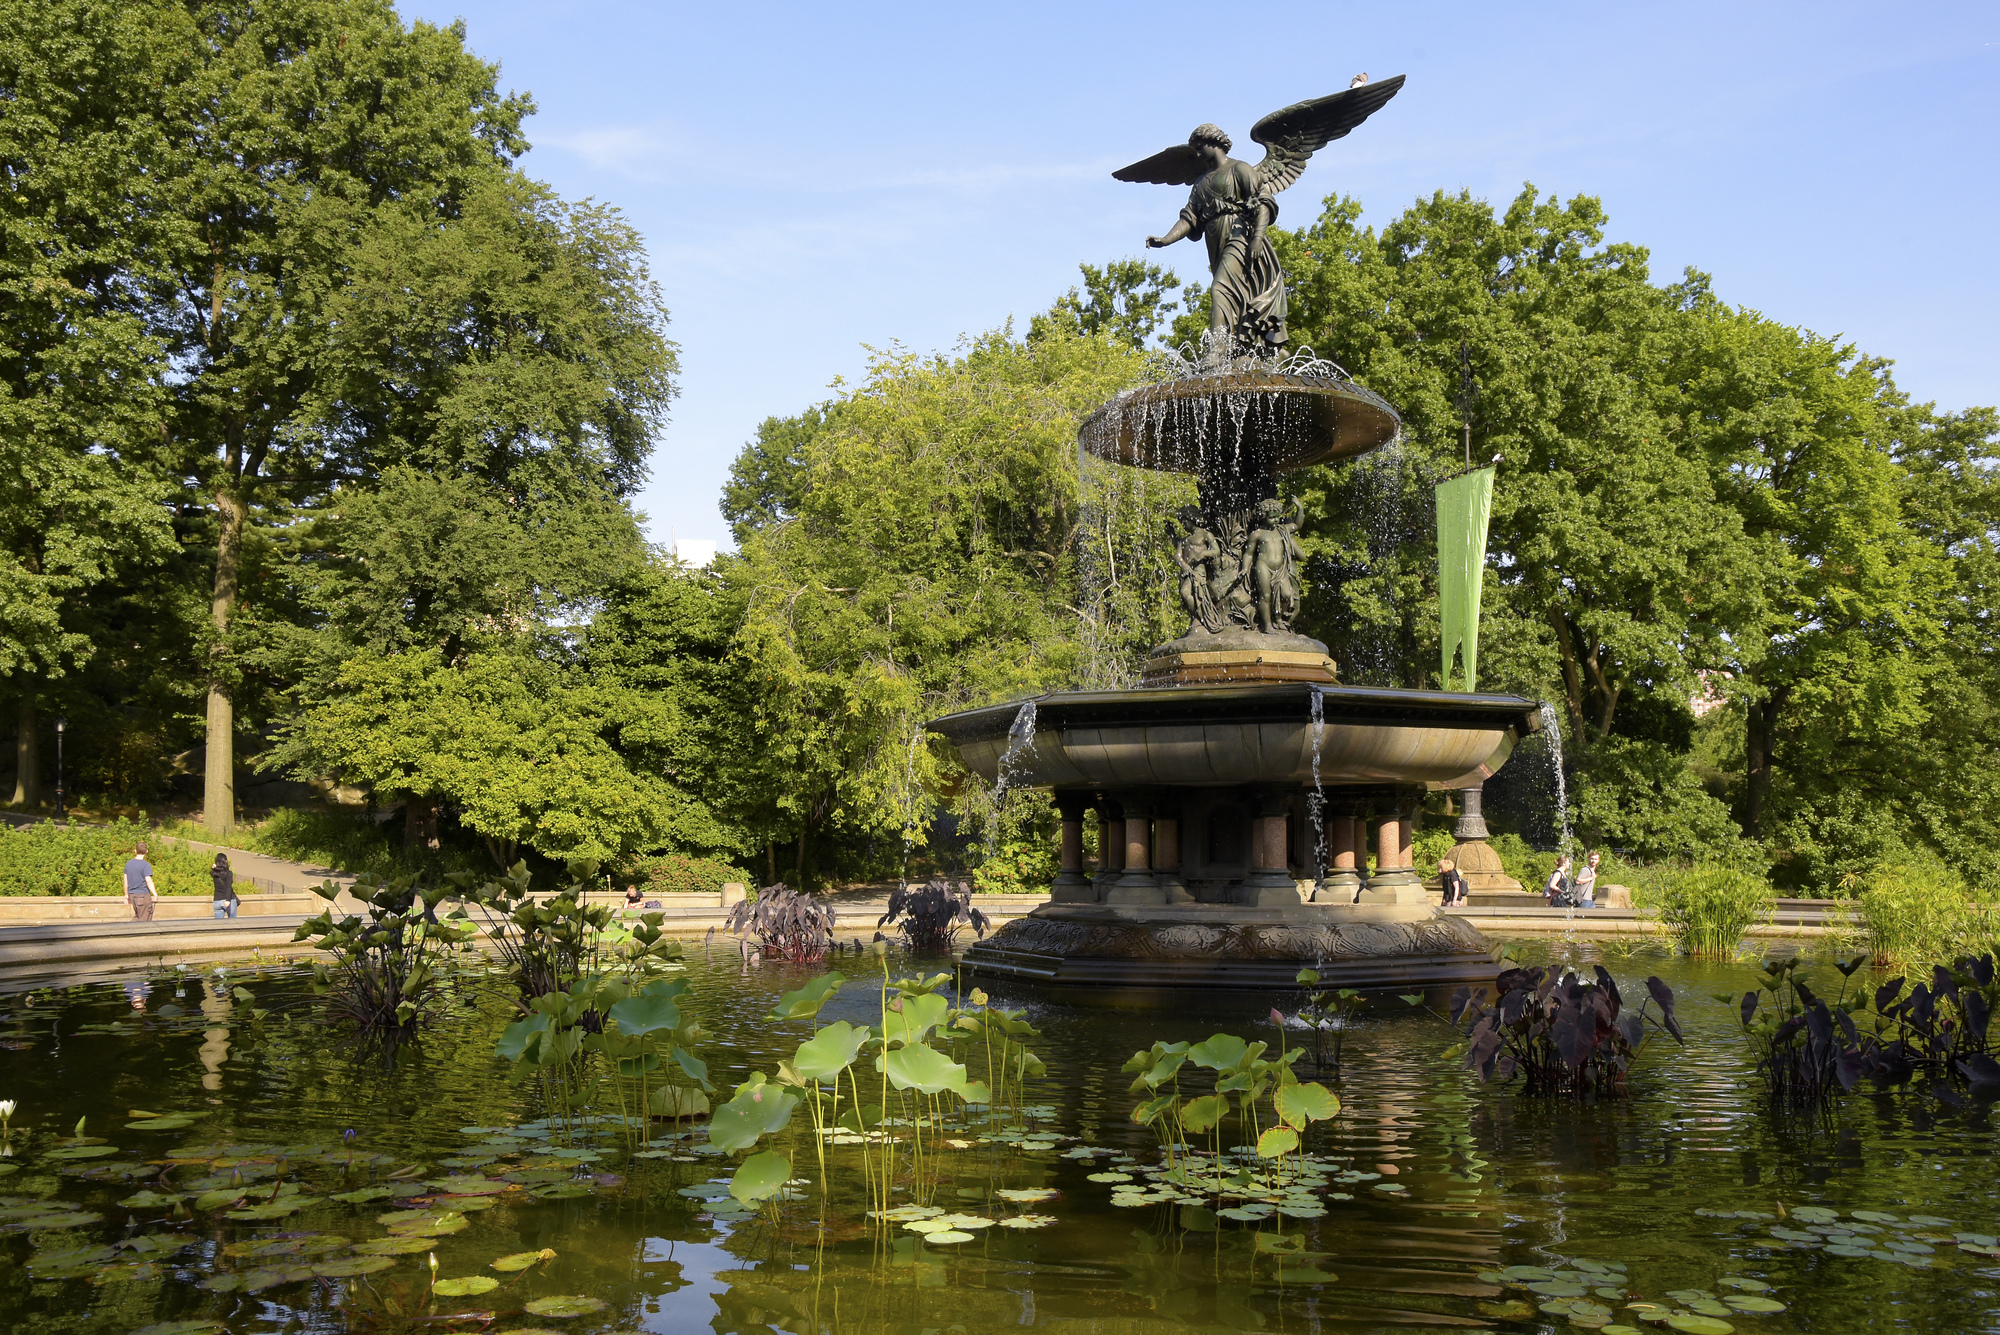 bethesda fountain in Central Park